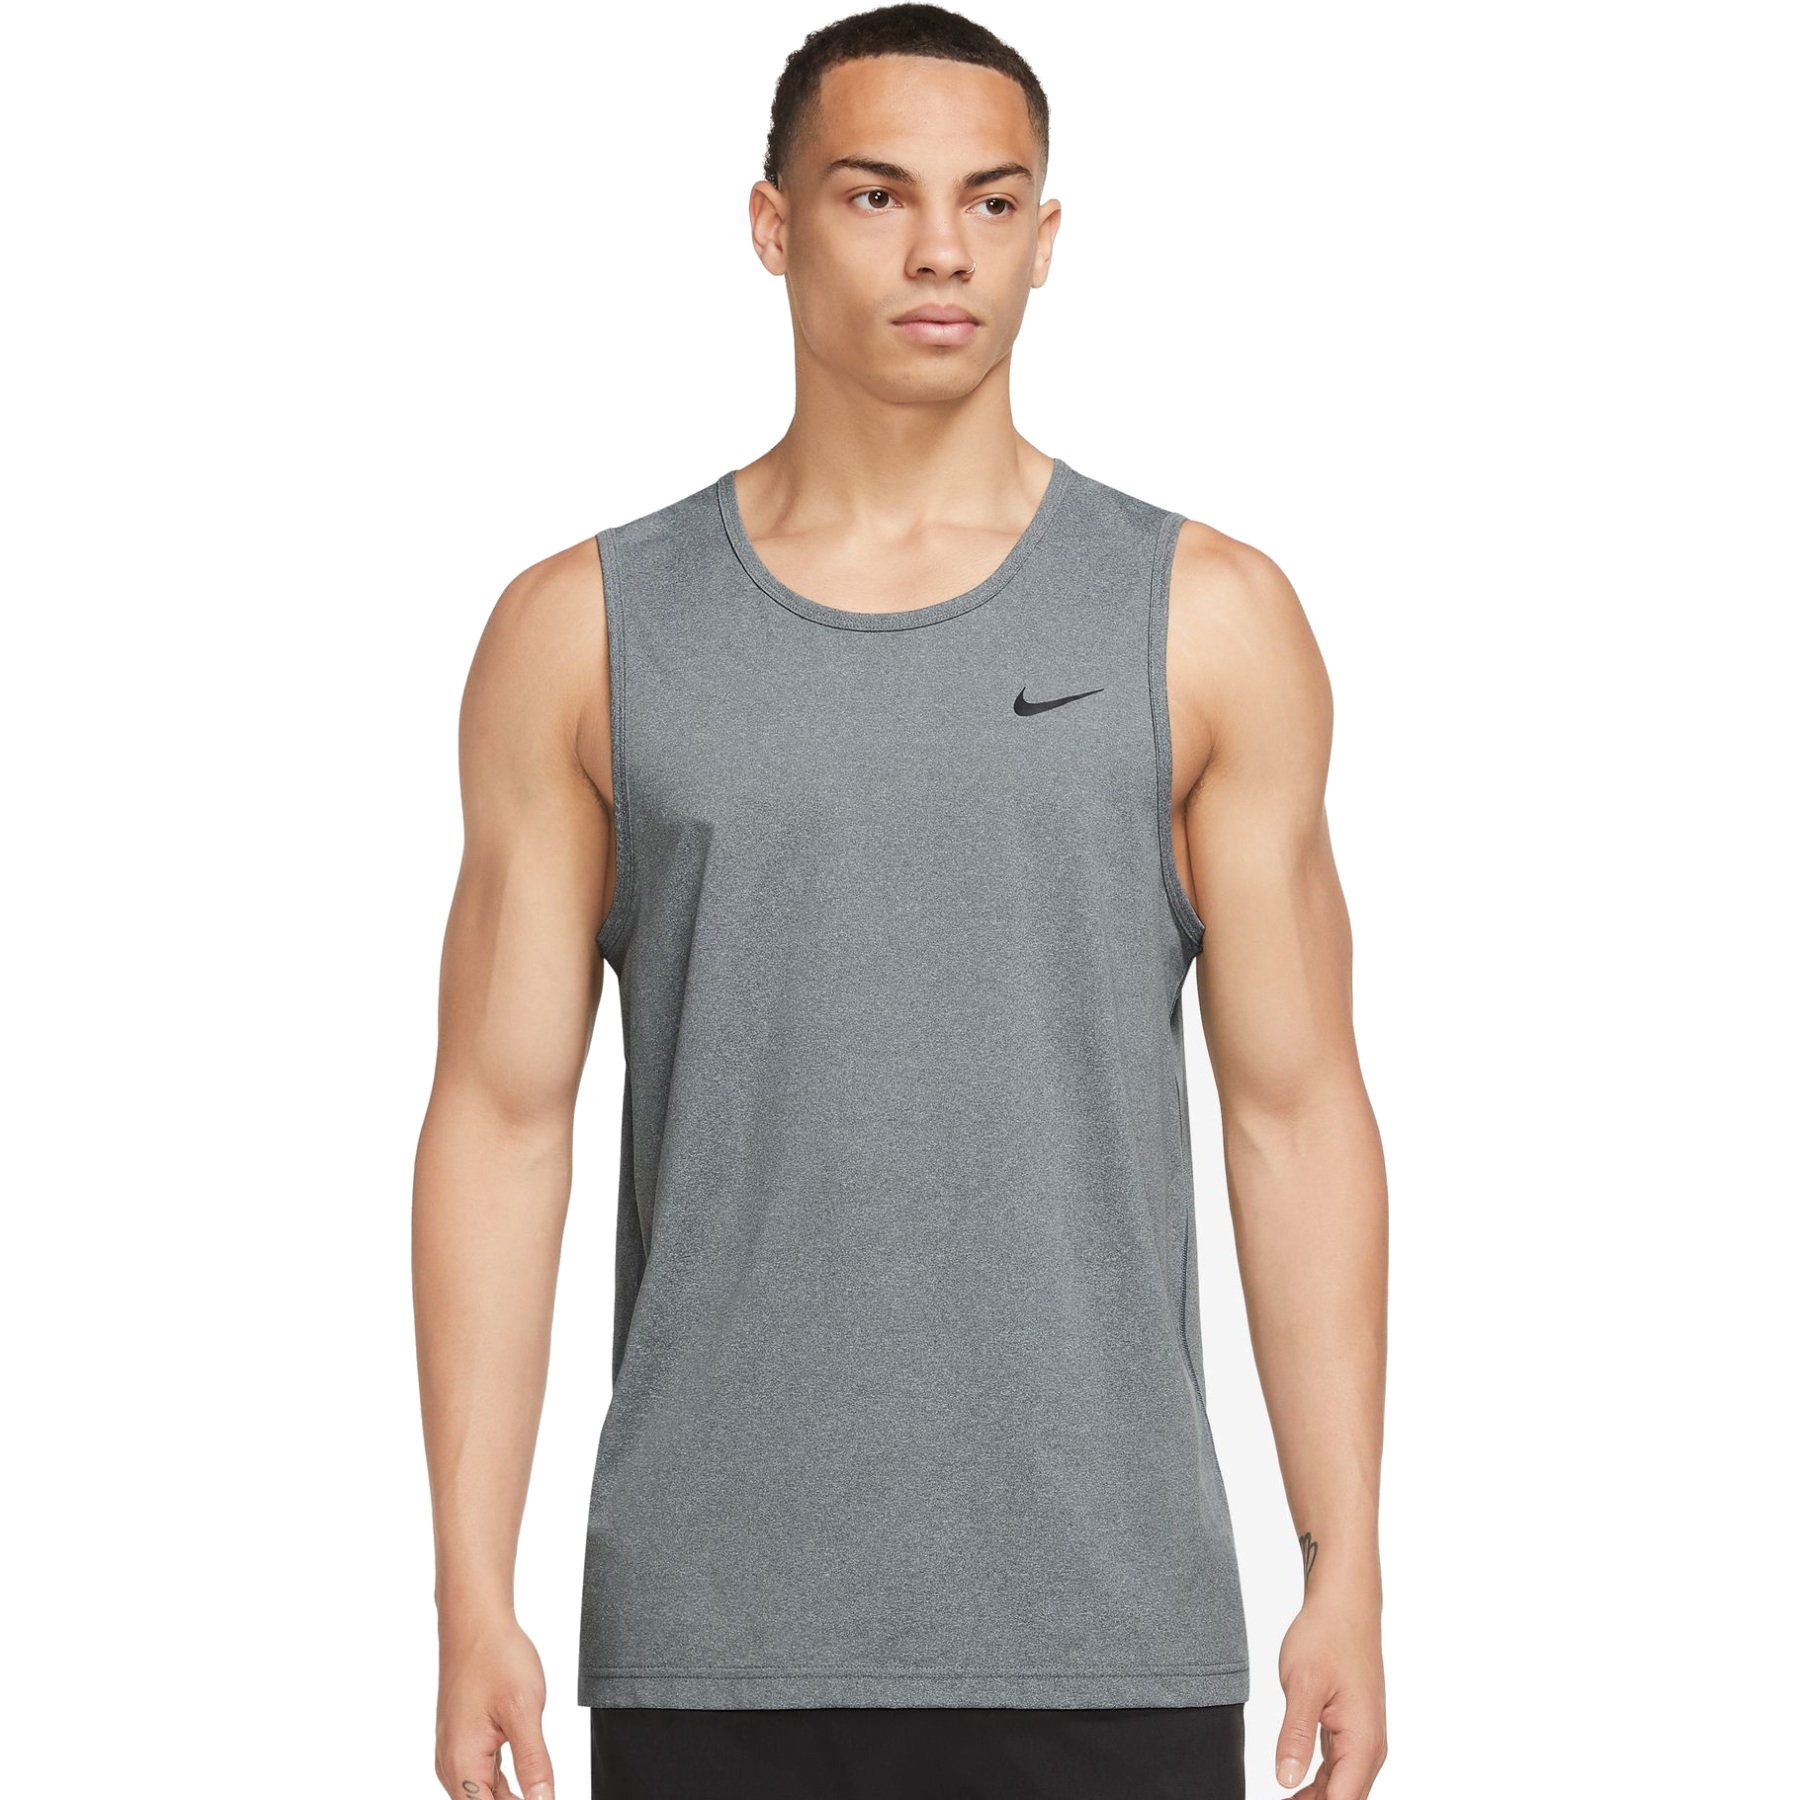 Foto de Nike Camiseta Fitness Hombre - Dri-FIT UV Hyverse - smoke grey/htr/black DV9841-097